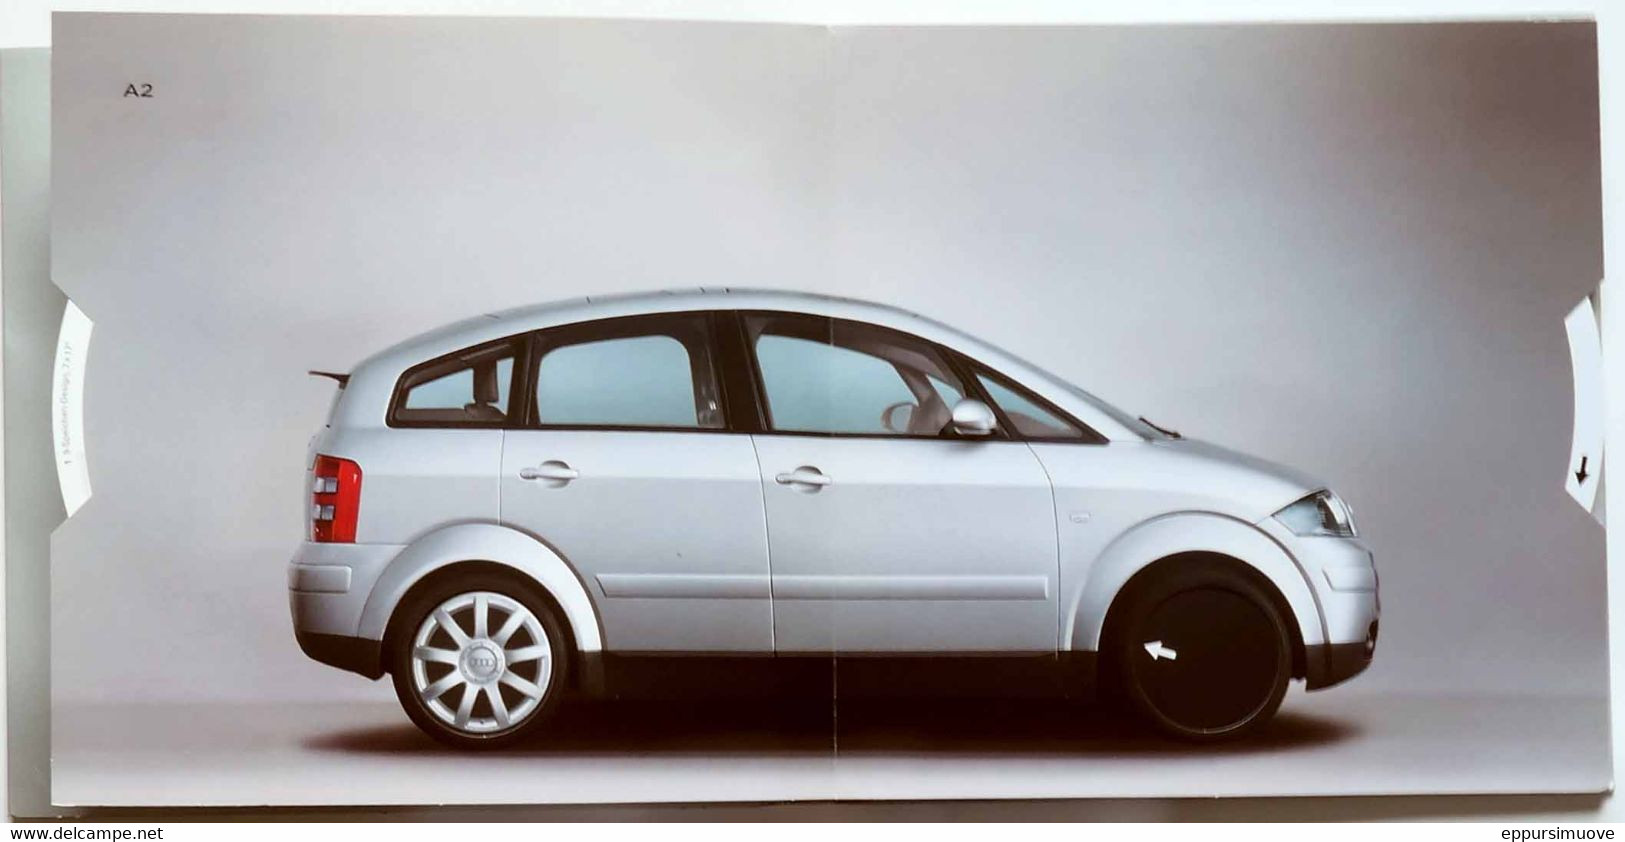 Audi Quattro Räder Katalog Broschure - DE - 02/2001 - Kataloge